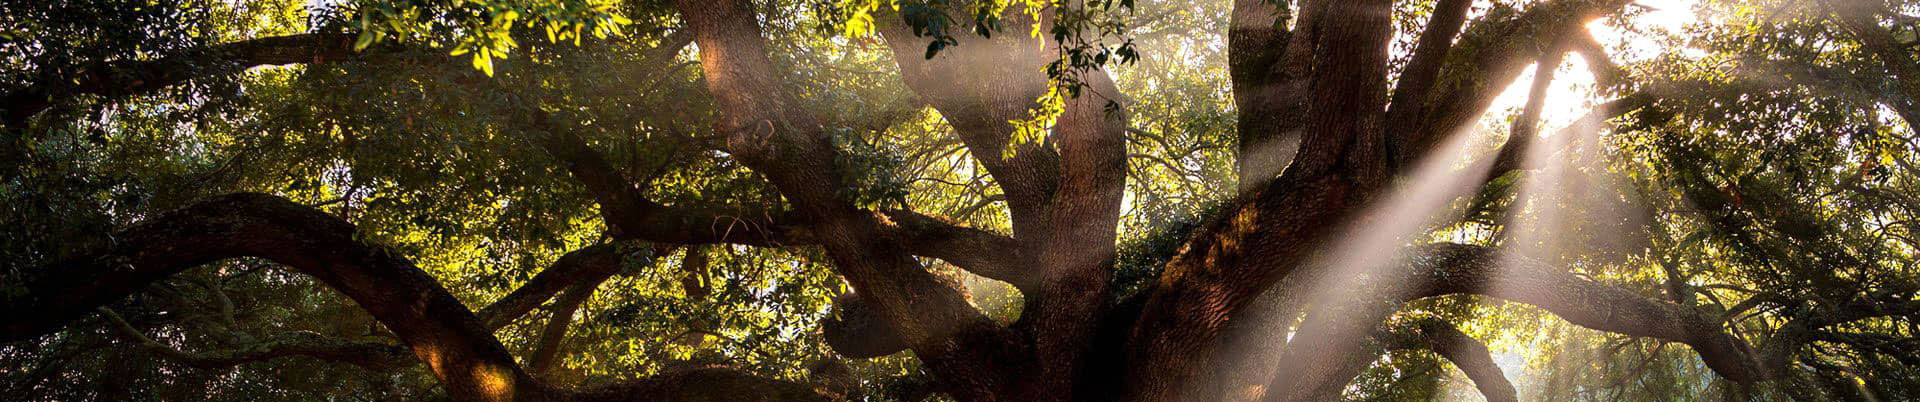 Sunlight streams through oak tree branches